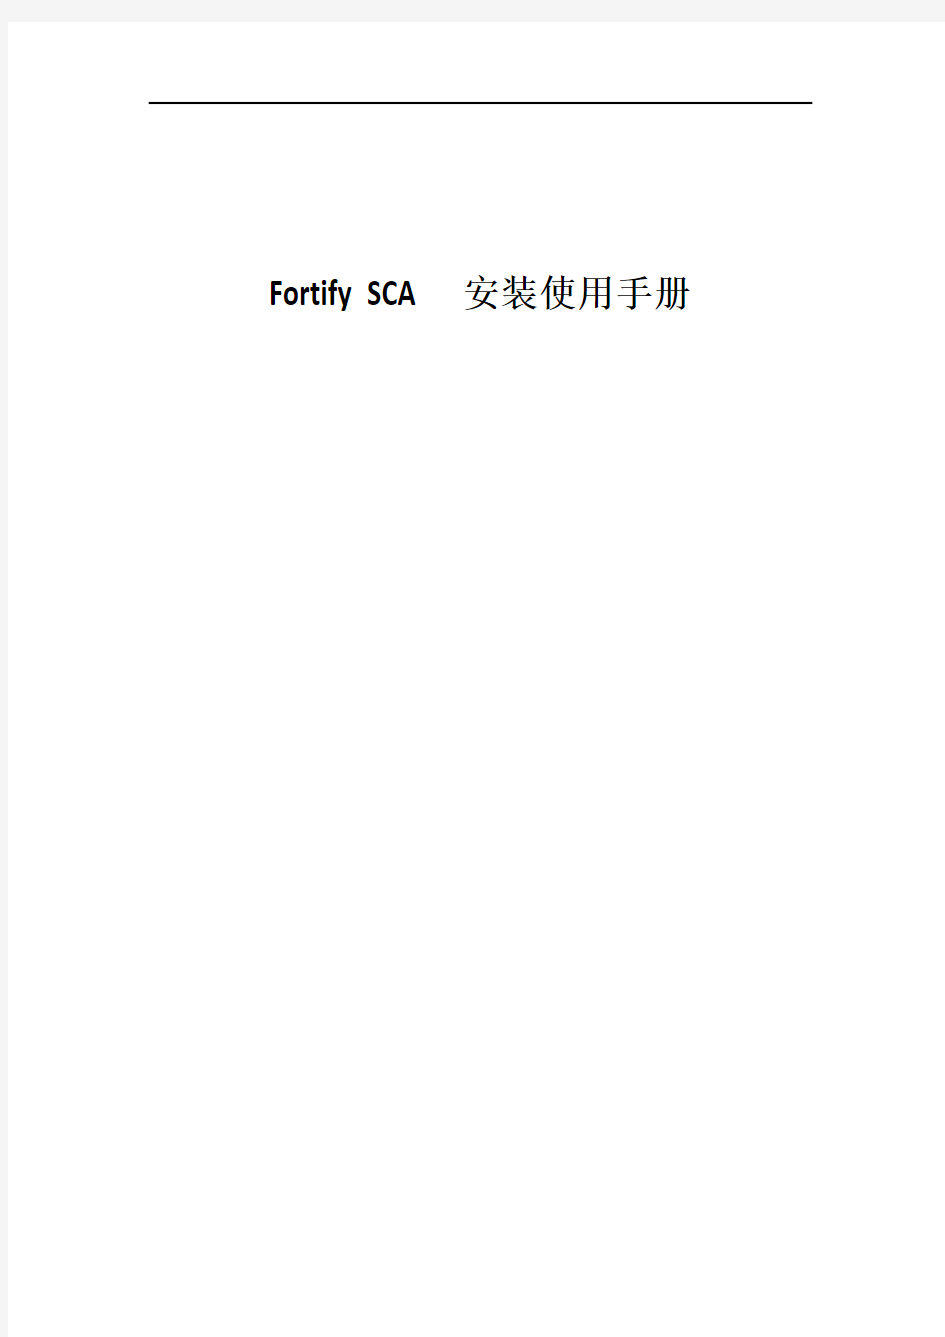 Fortify SCA 安装使用手册